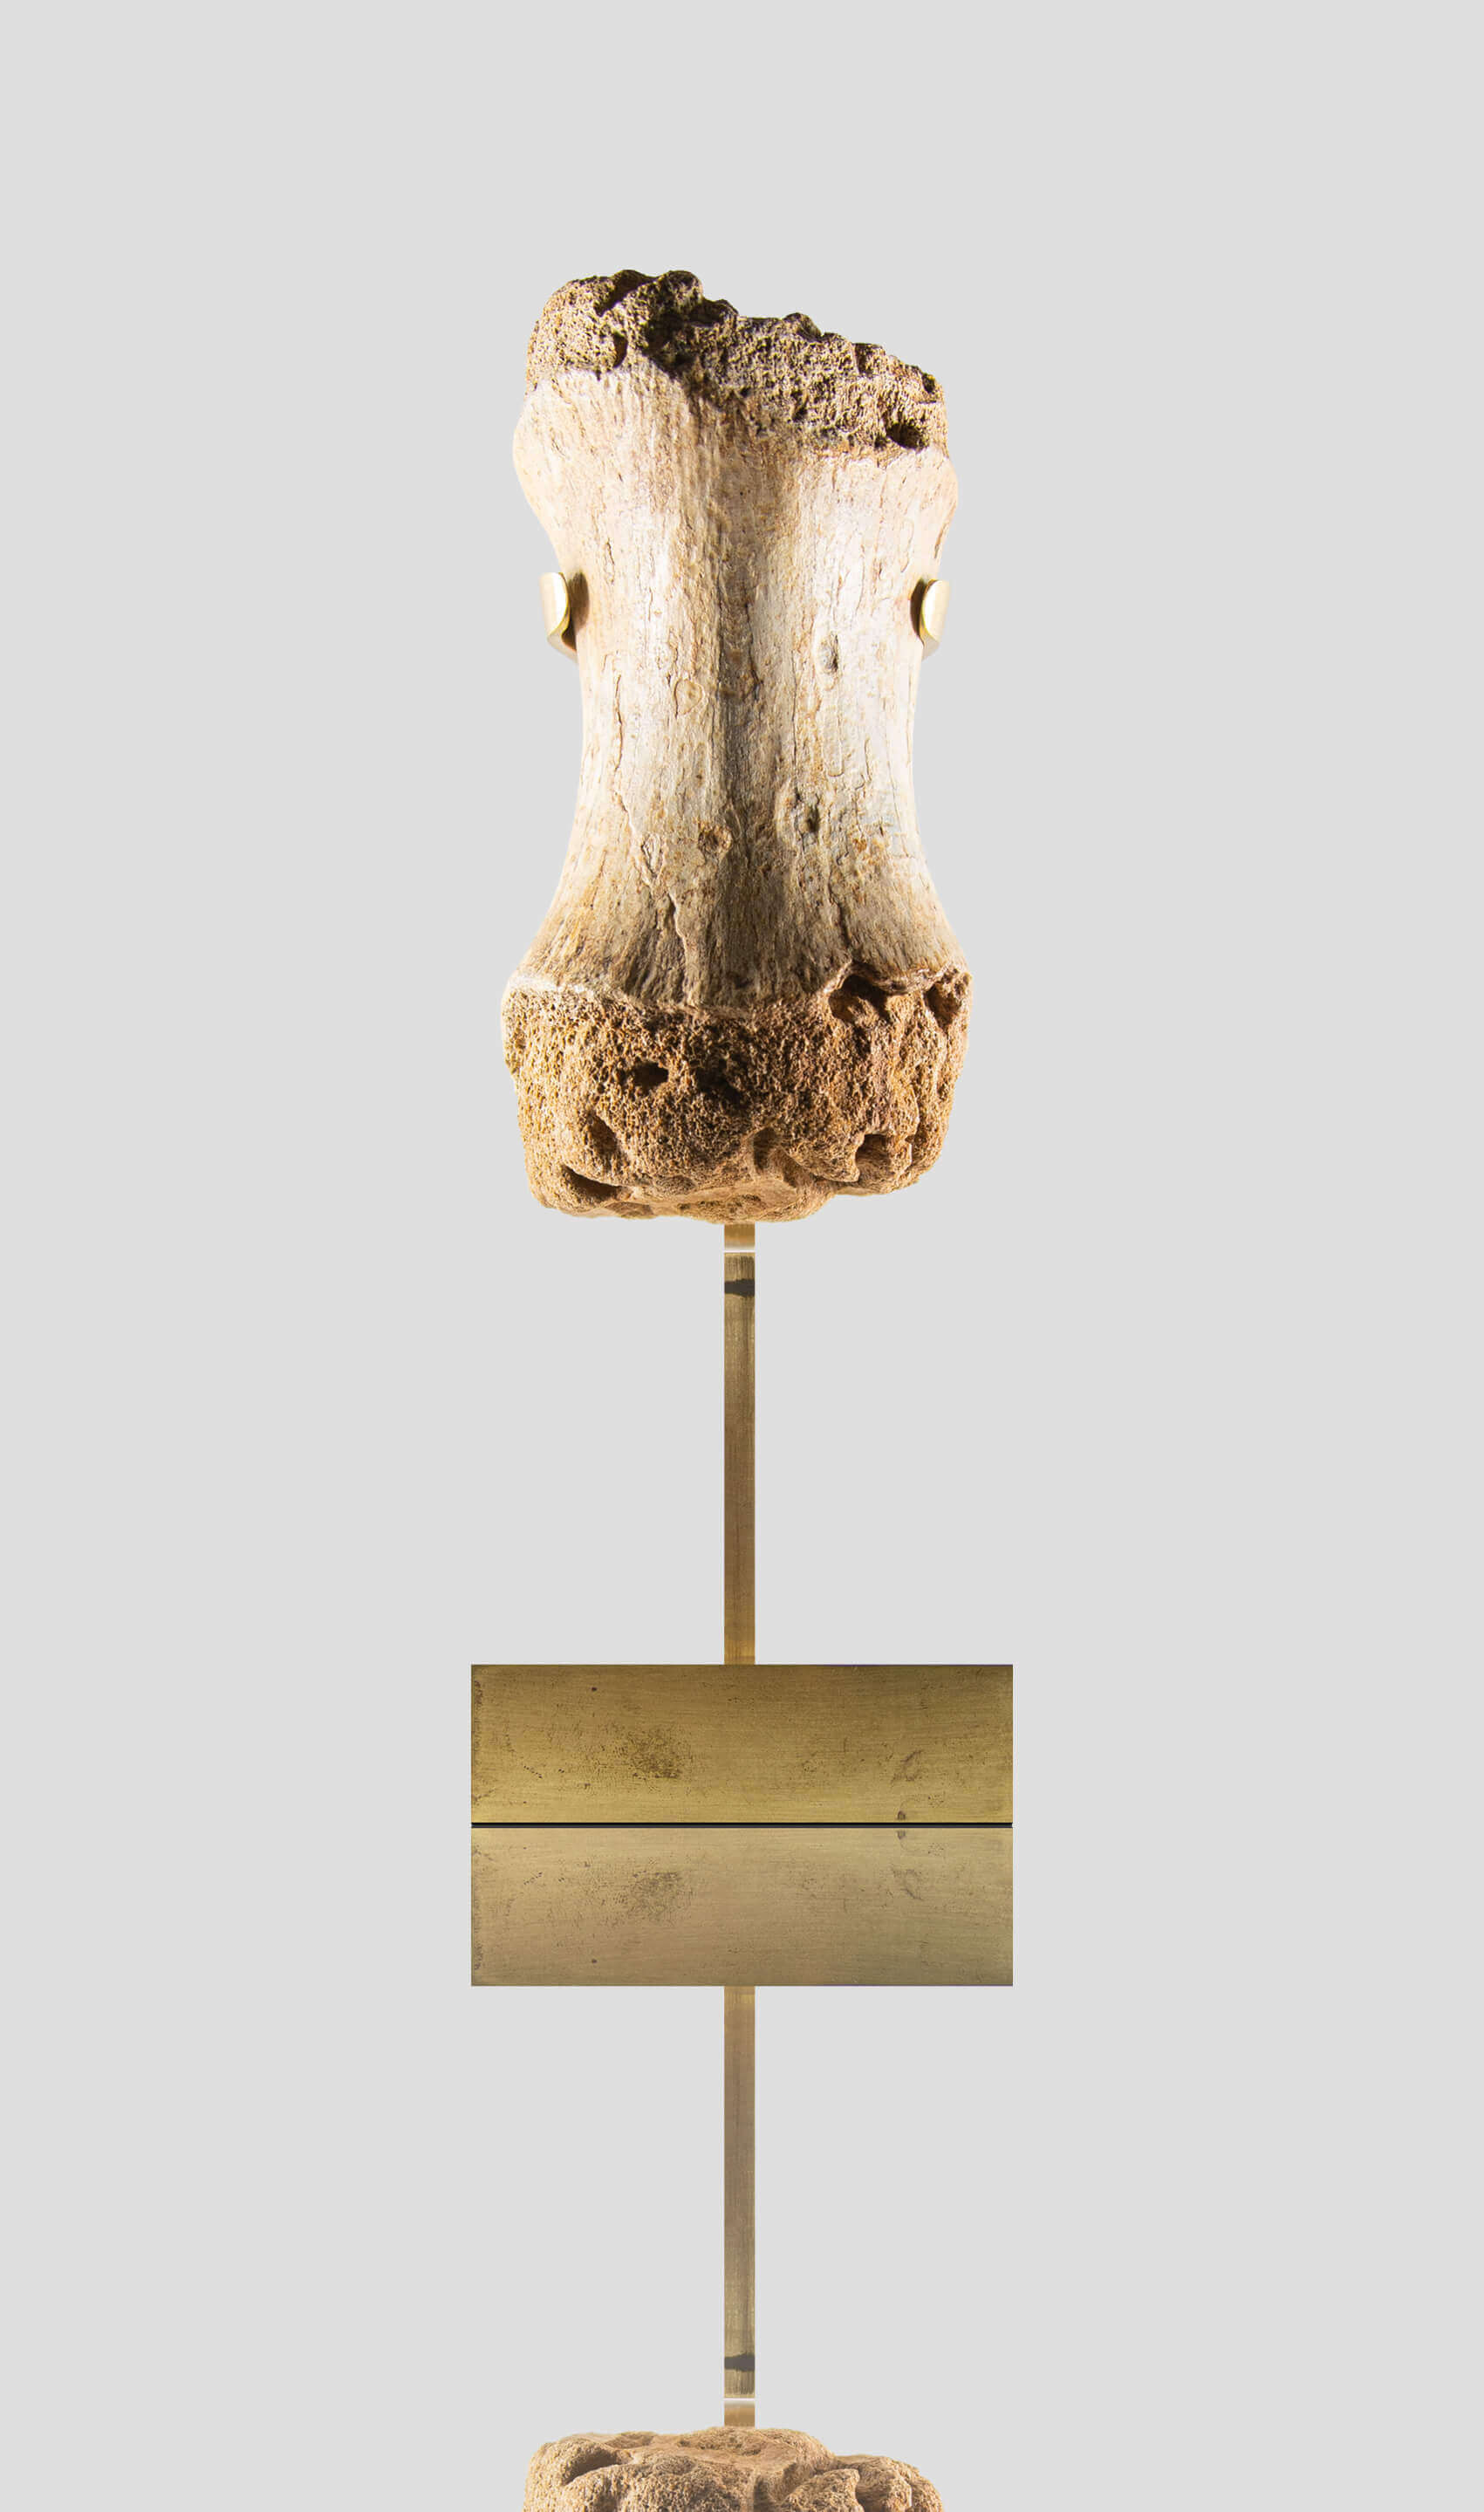 carcharodontosaurus vertebra on a beautiful custom brass stand for a wonderful display